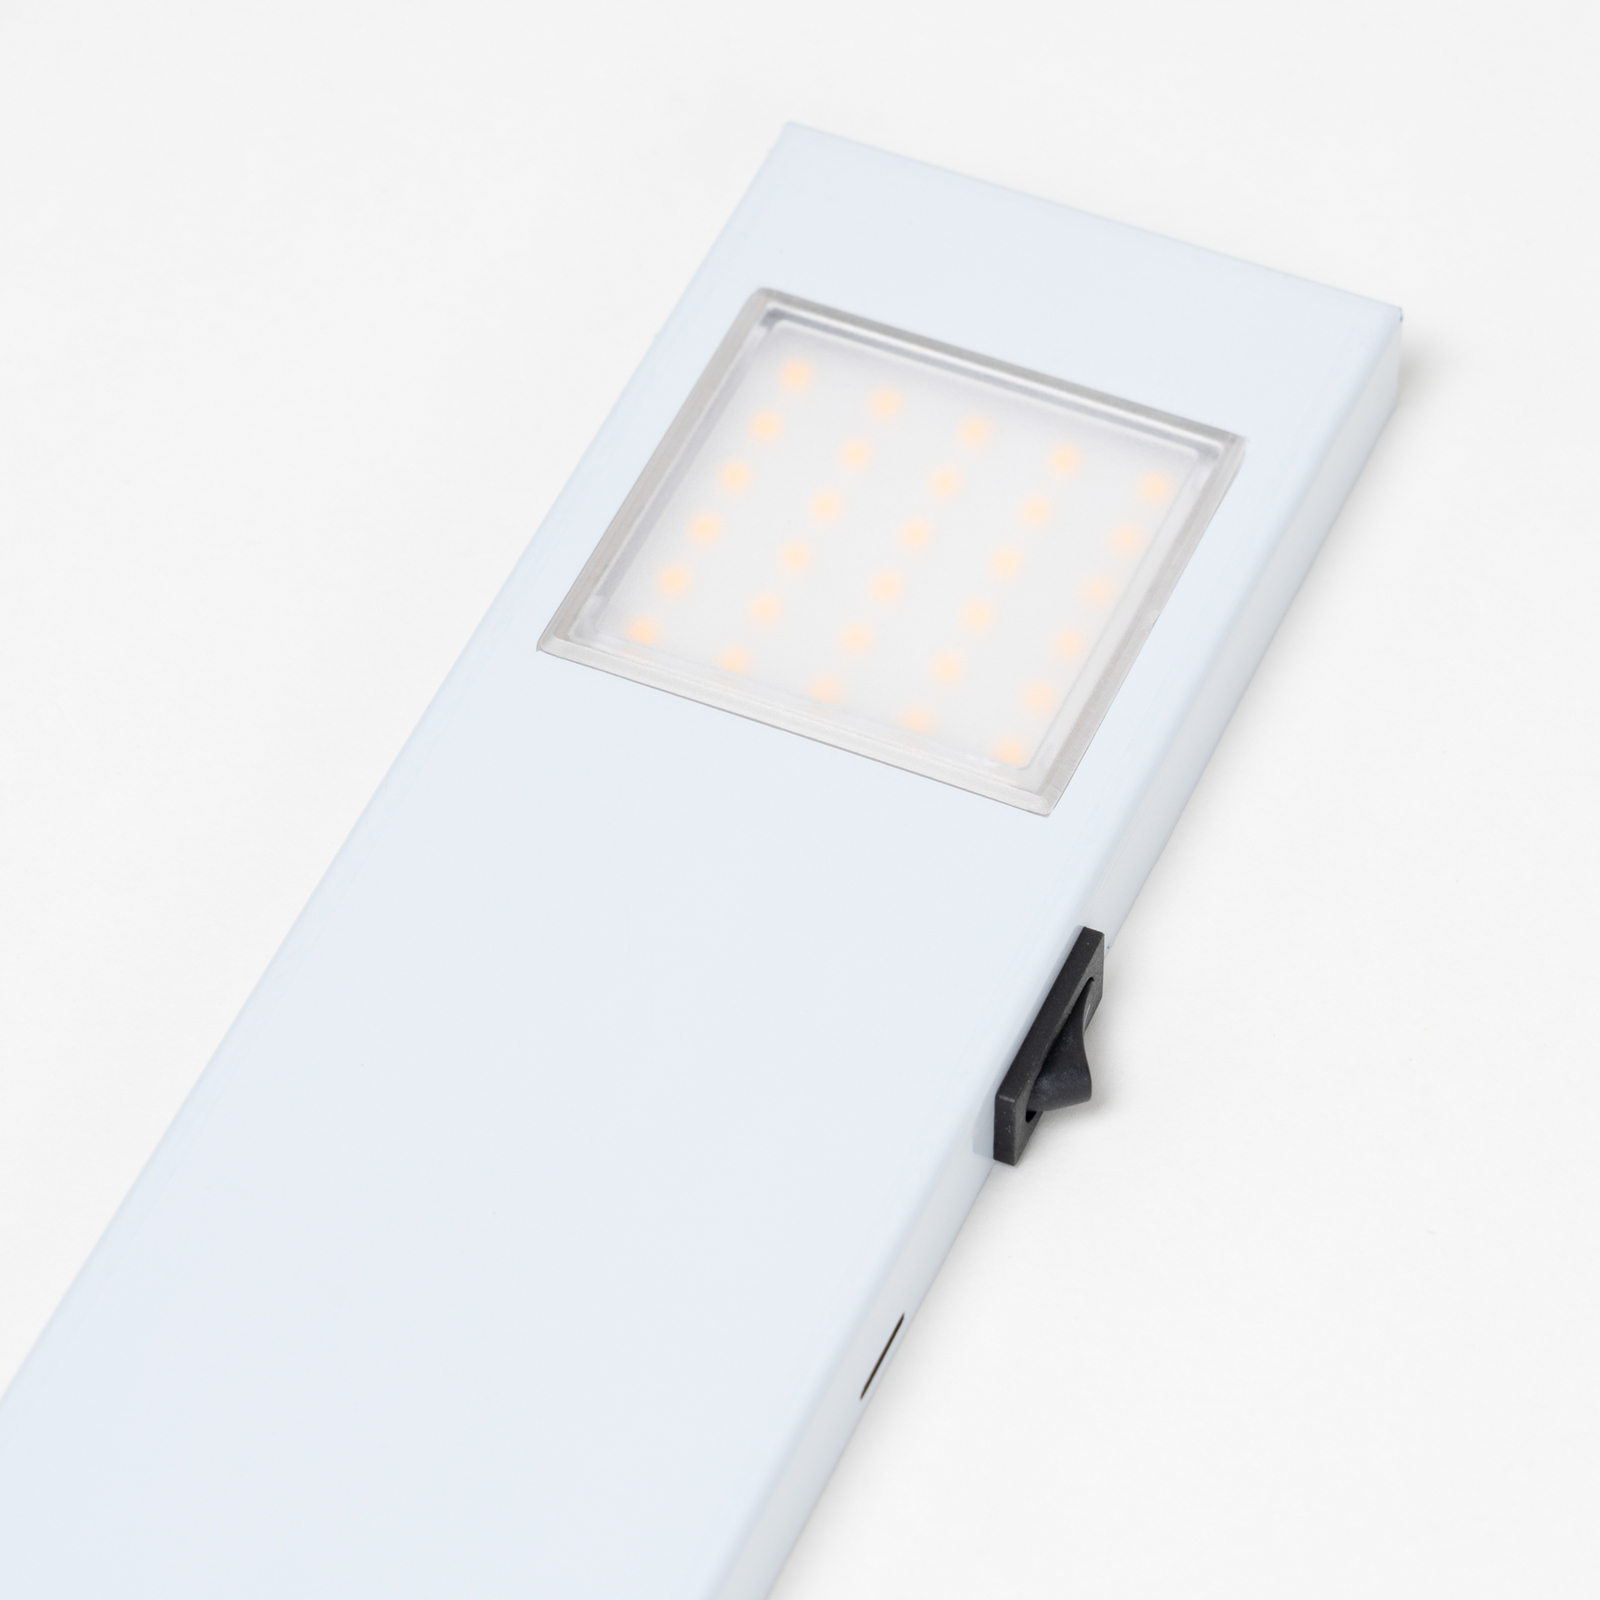 Prios Lorna -LED-kaapinalusvalaisin, teräs, 3 kpl